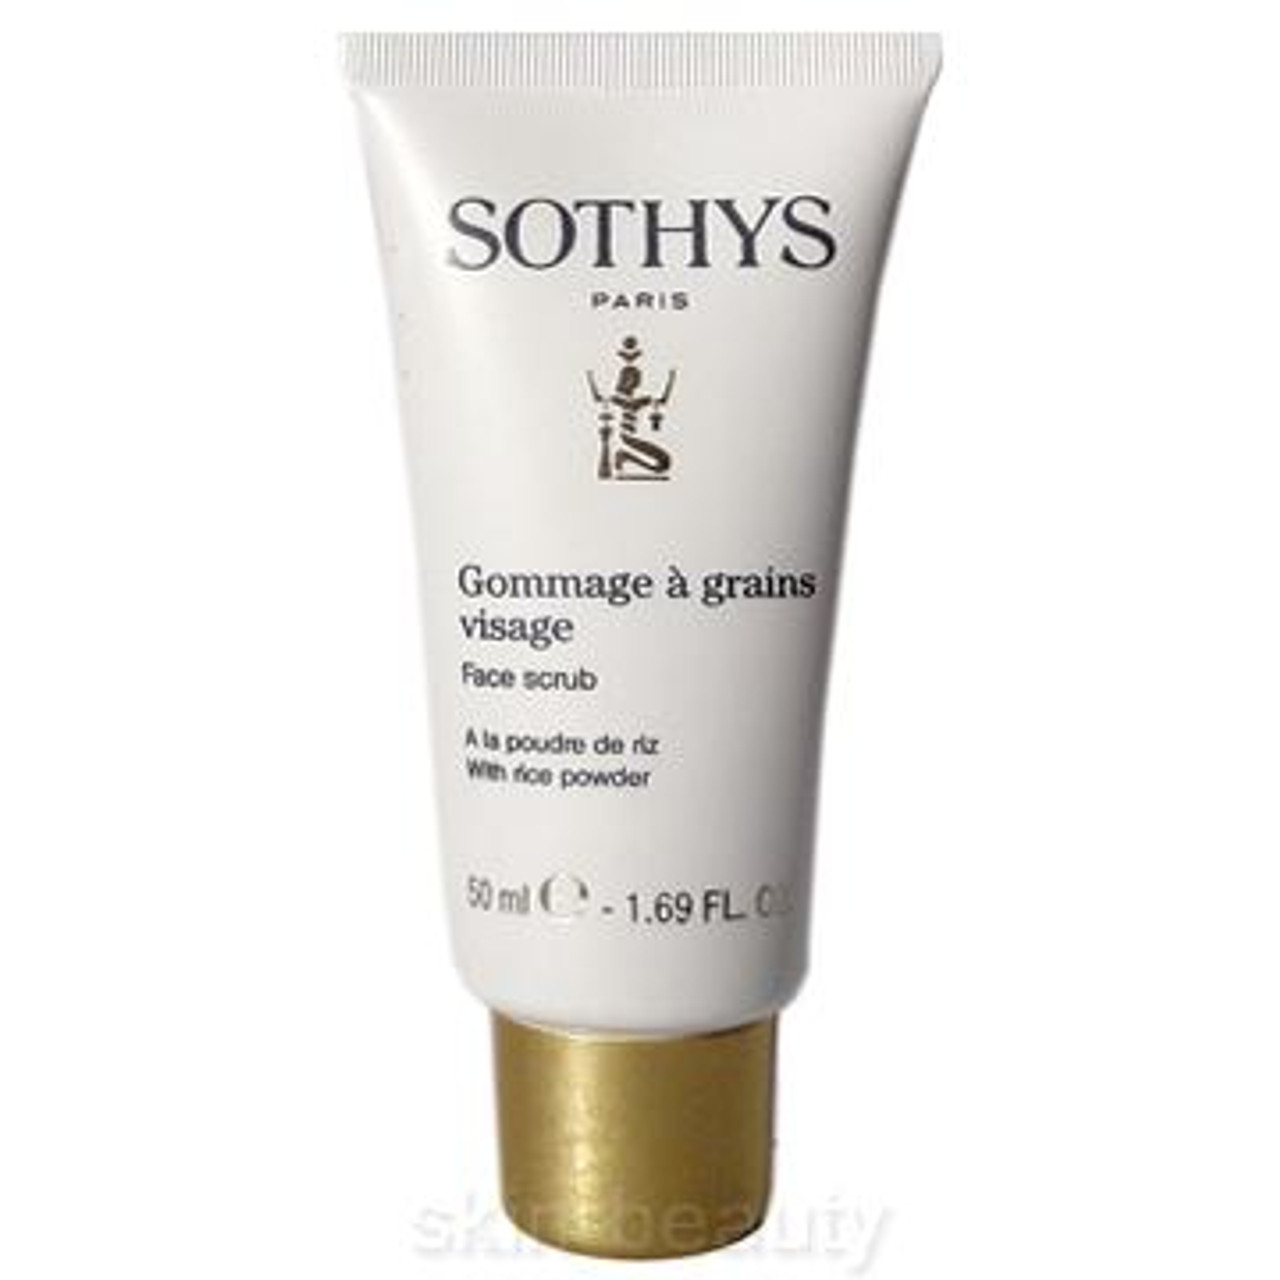 Sothys Face Scrub - 1.69 oz